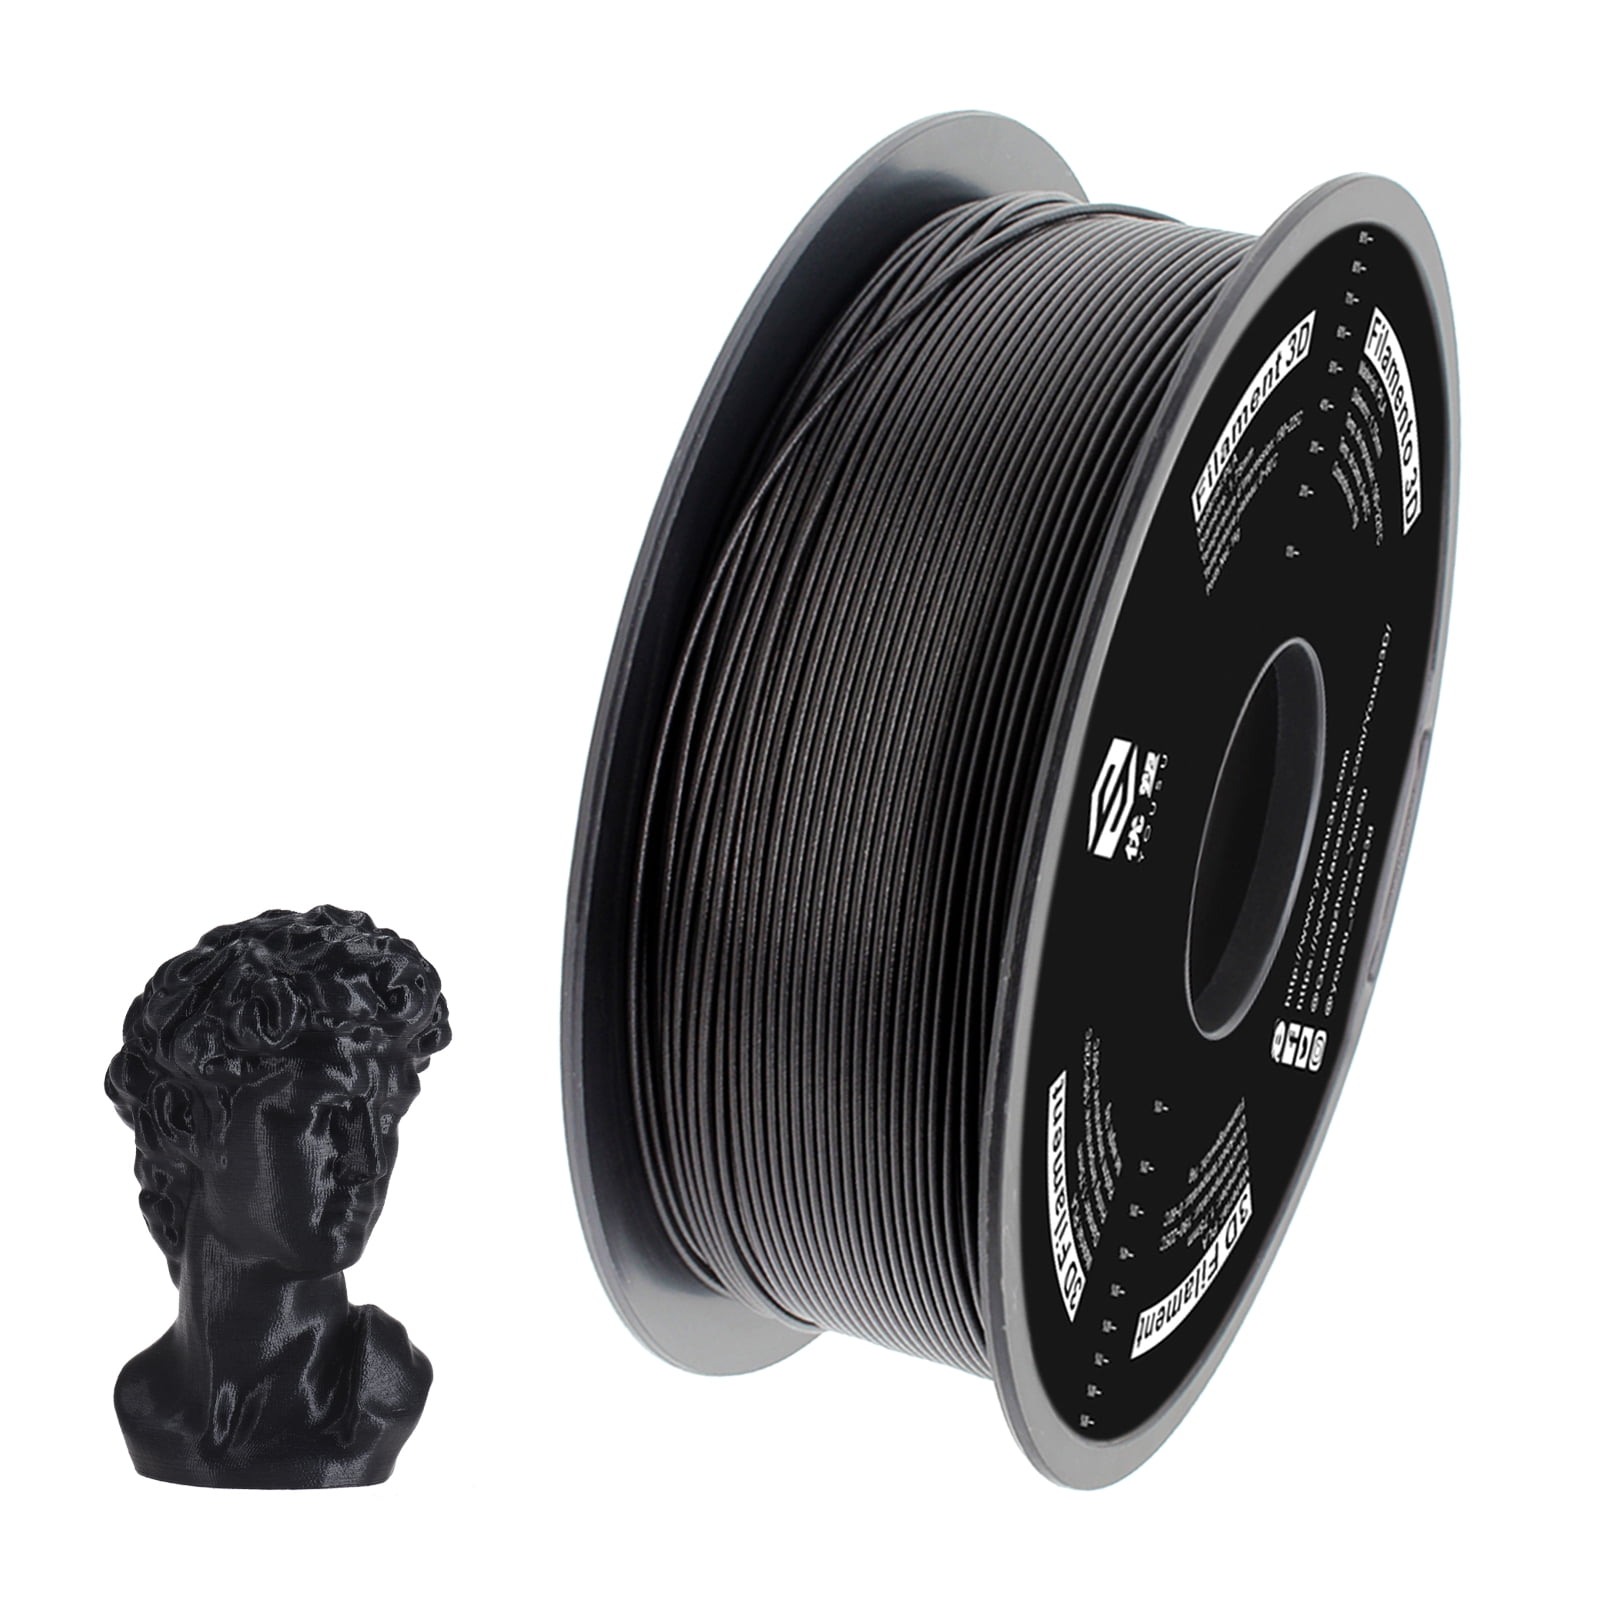 3D Printer Printing Filament 1.75mm 1KG Spool Accuracy Makerbot PETG/PLA/PLA+ 